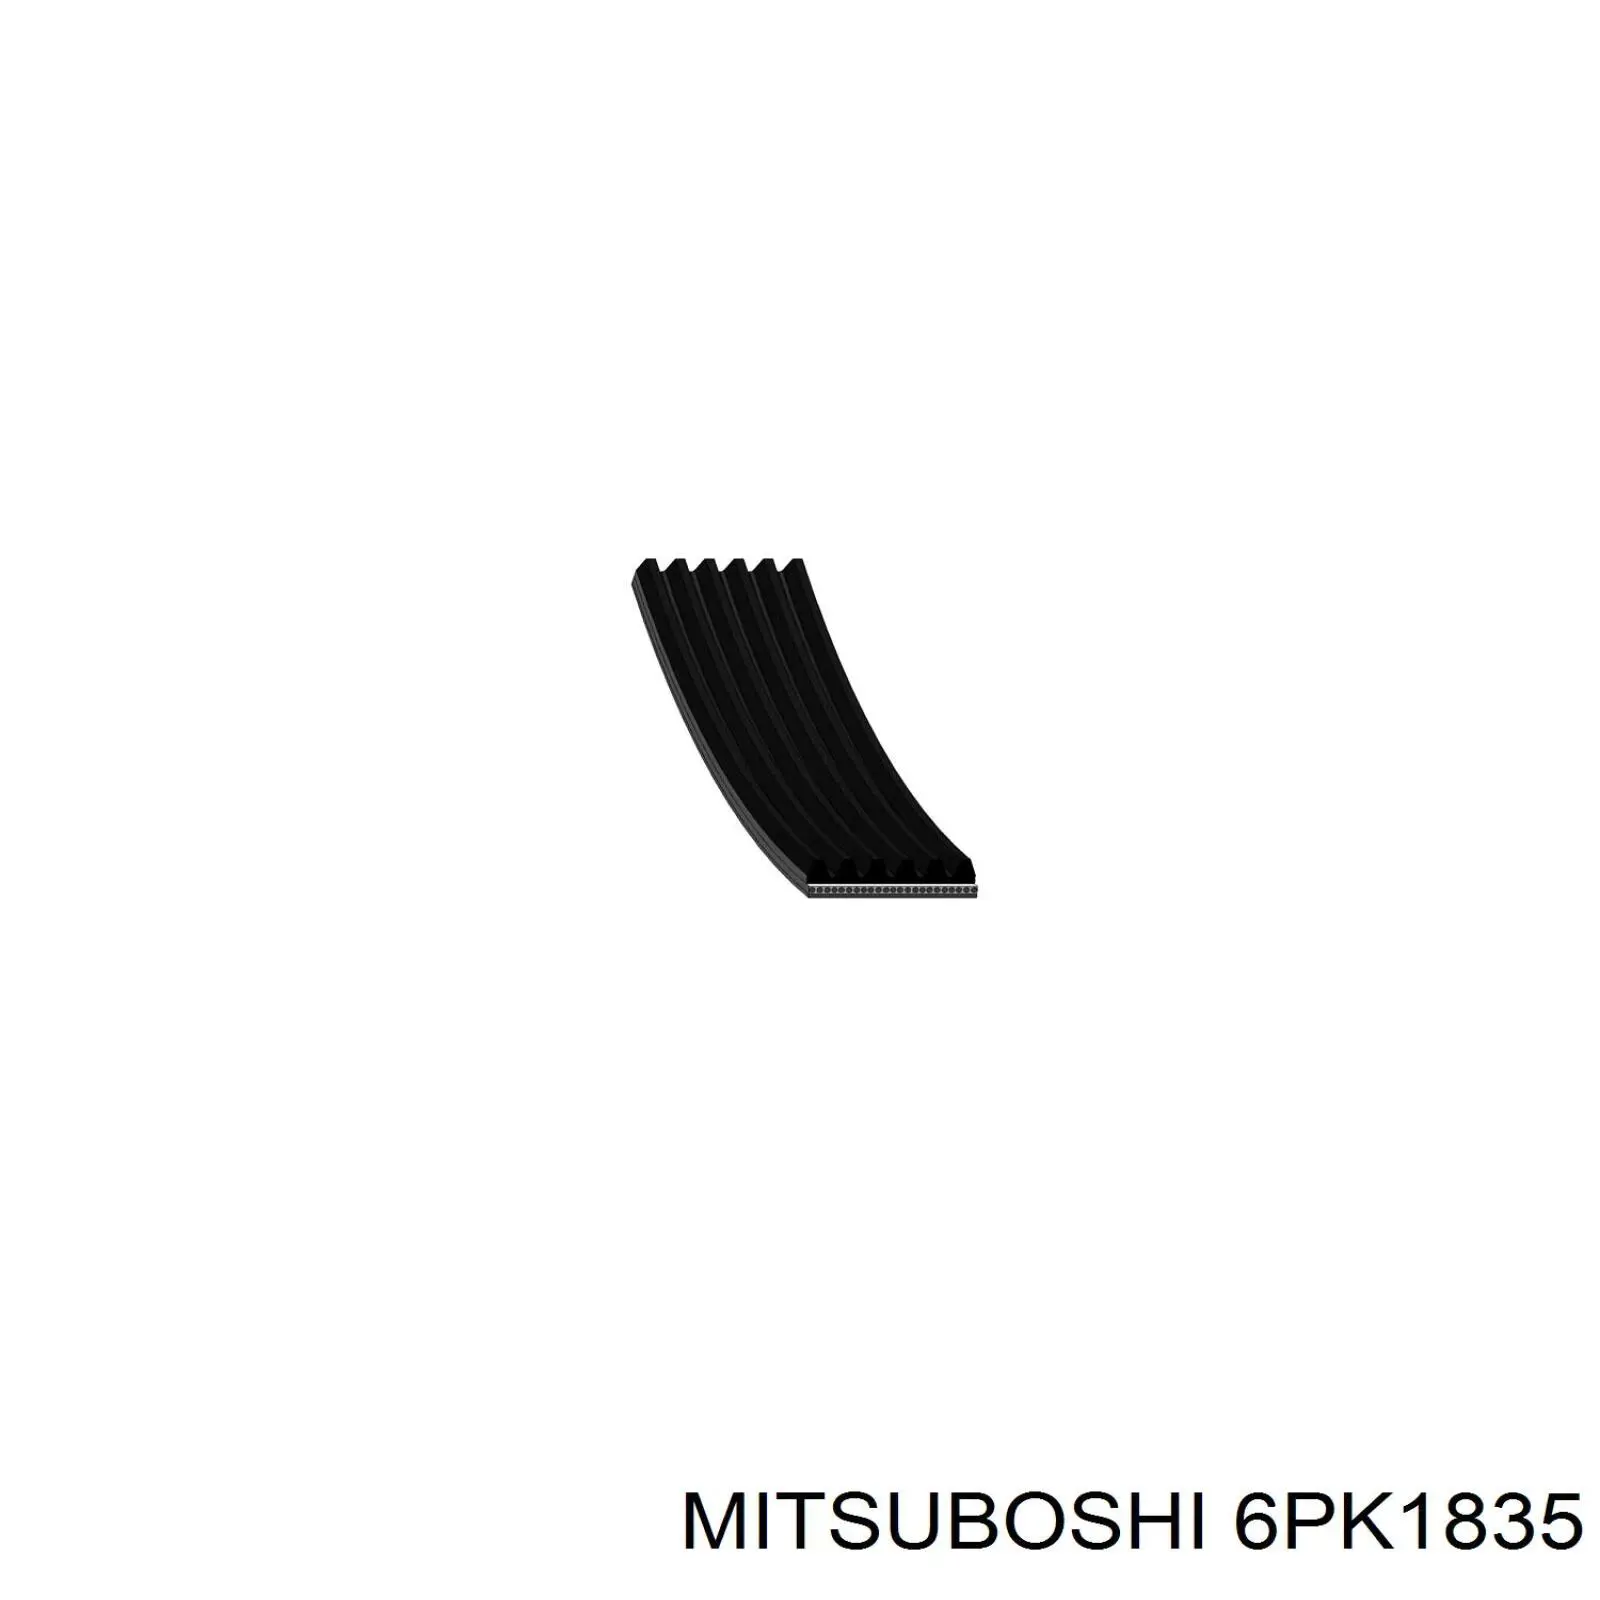 6PK1835 Mitsuboshi ремень генератора